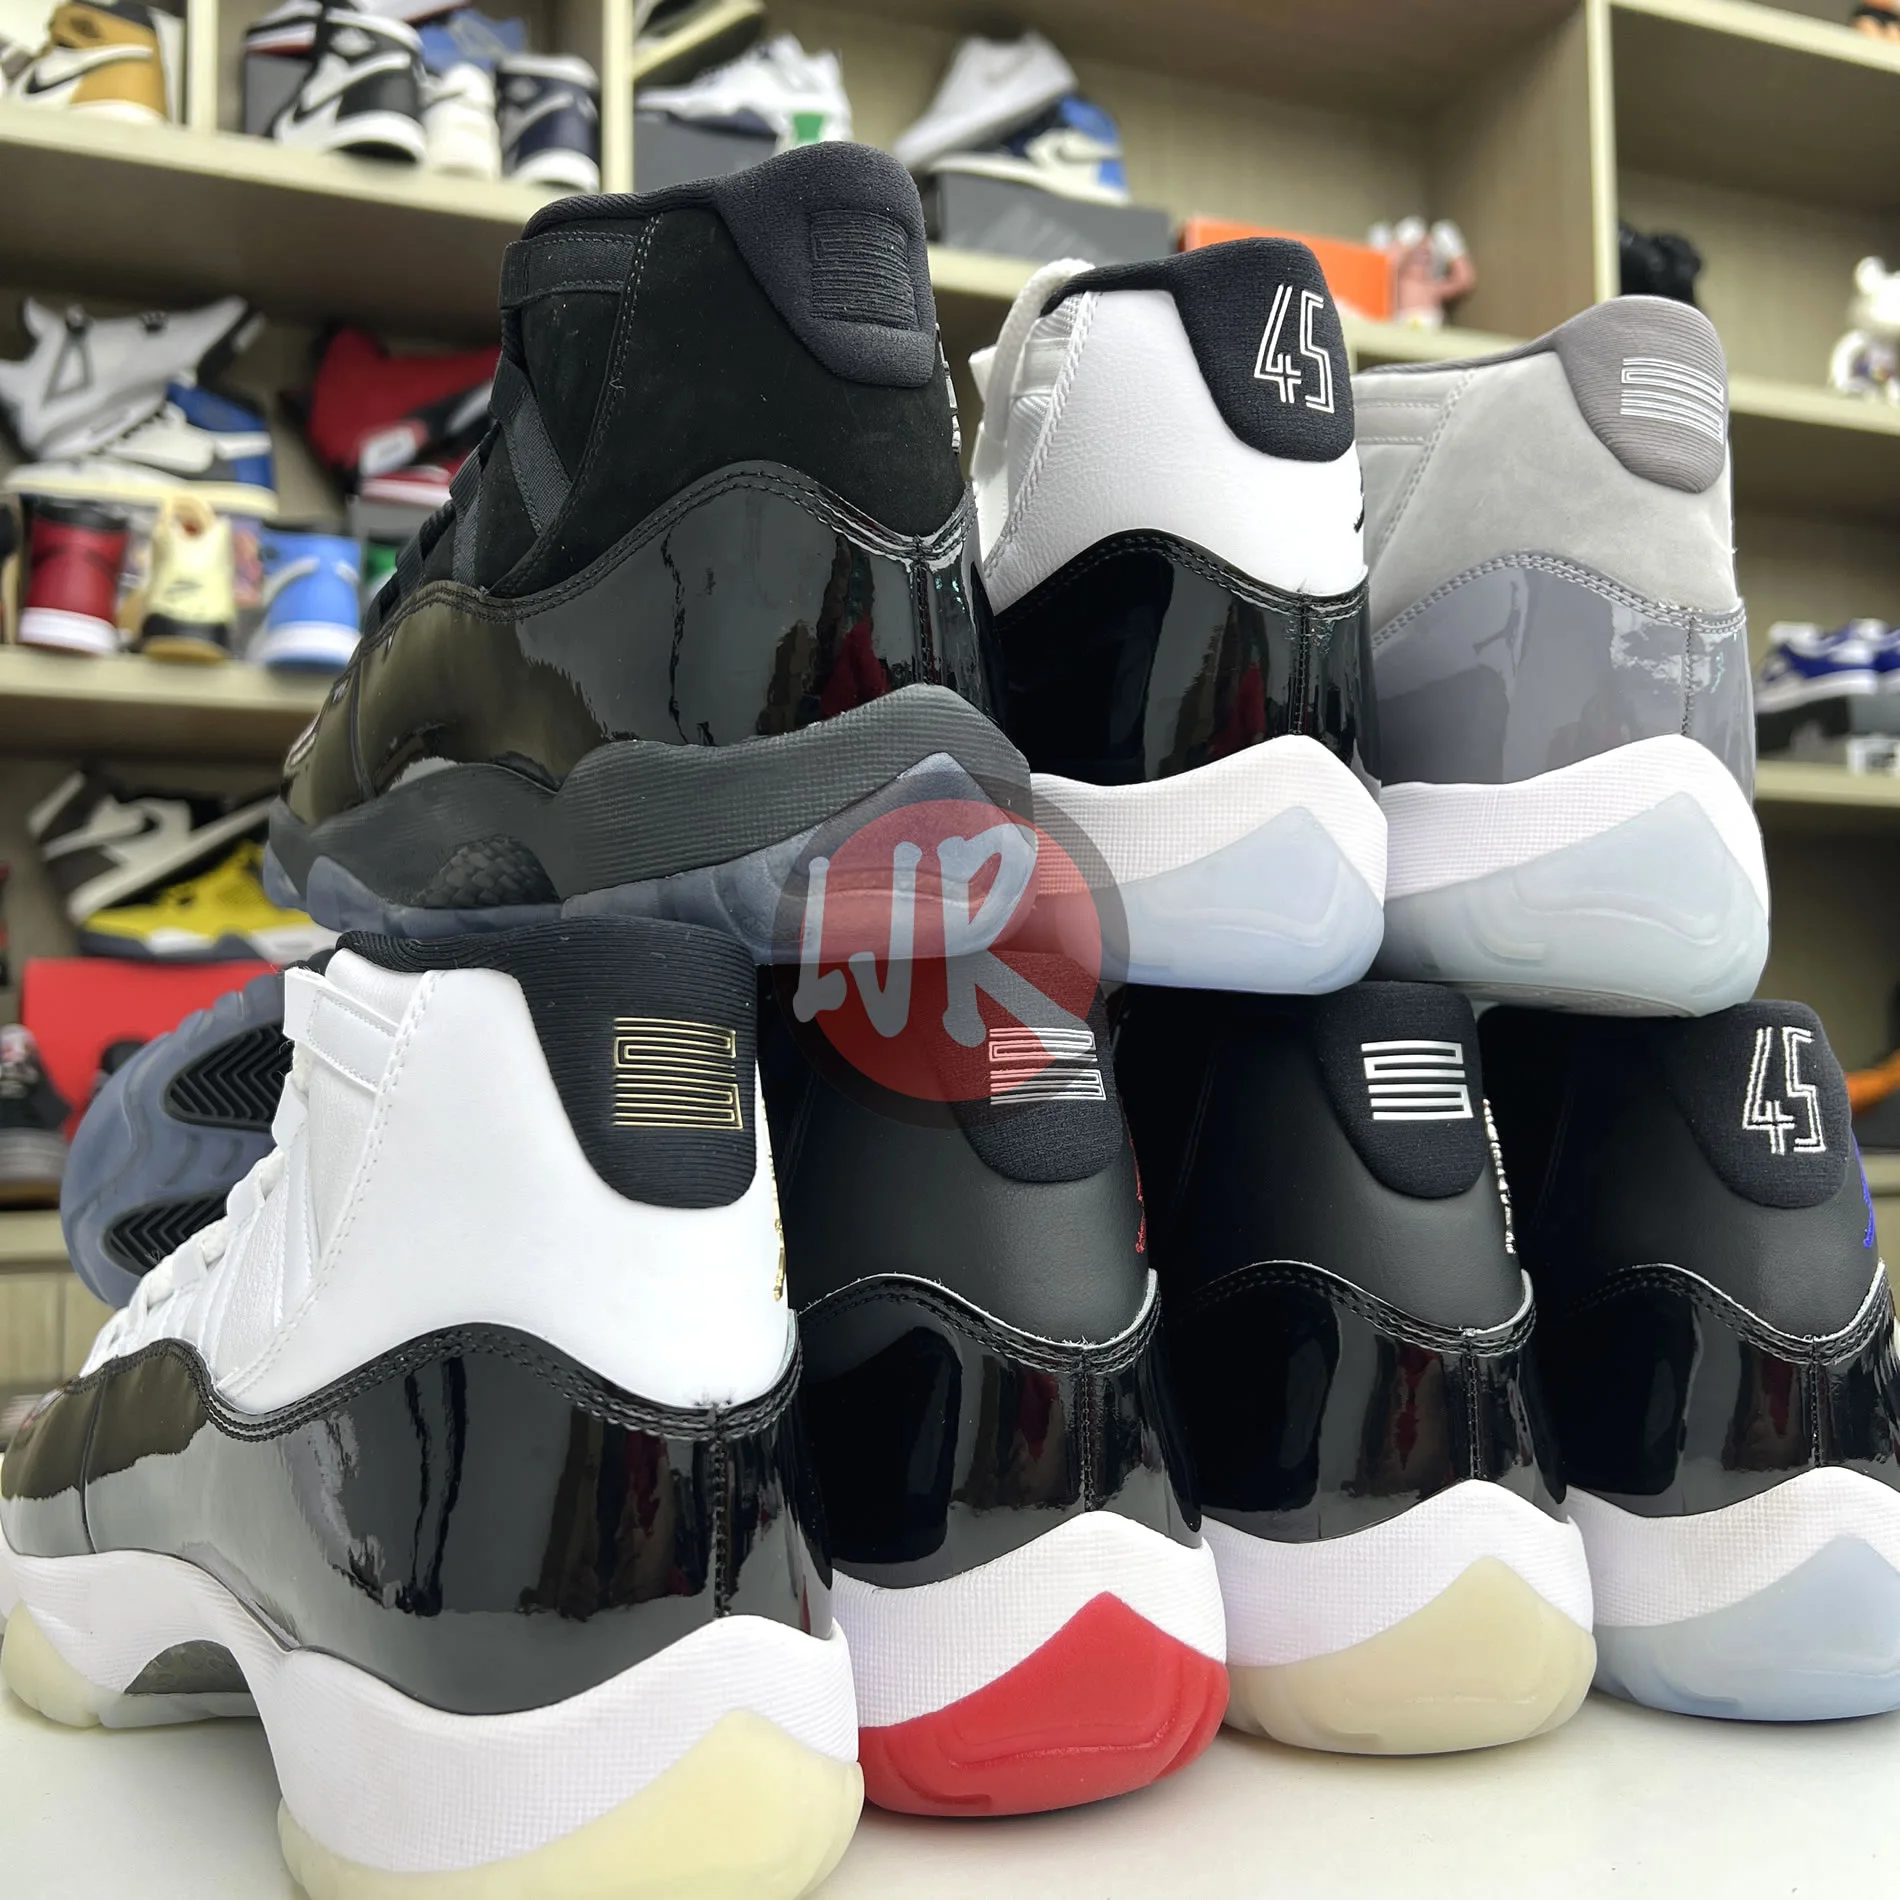 LJR Batch Sneakers Air Jordan 11 Family Shoes Back